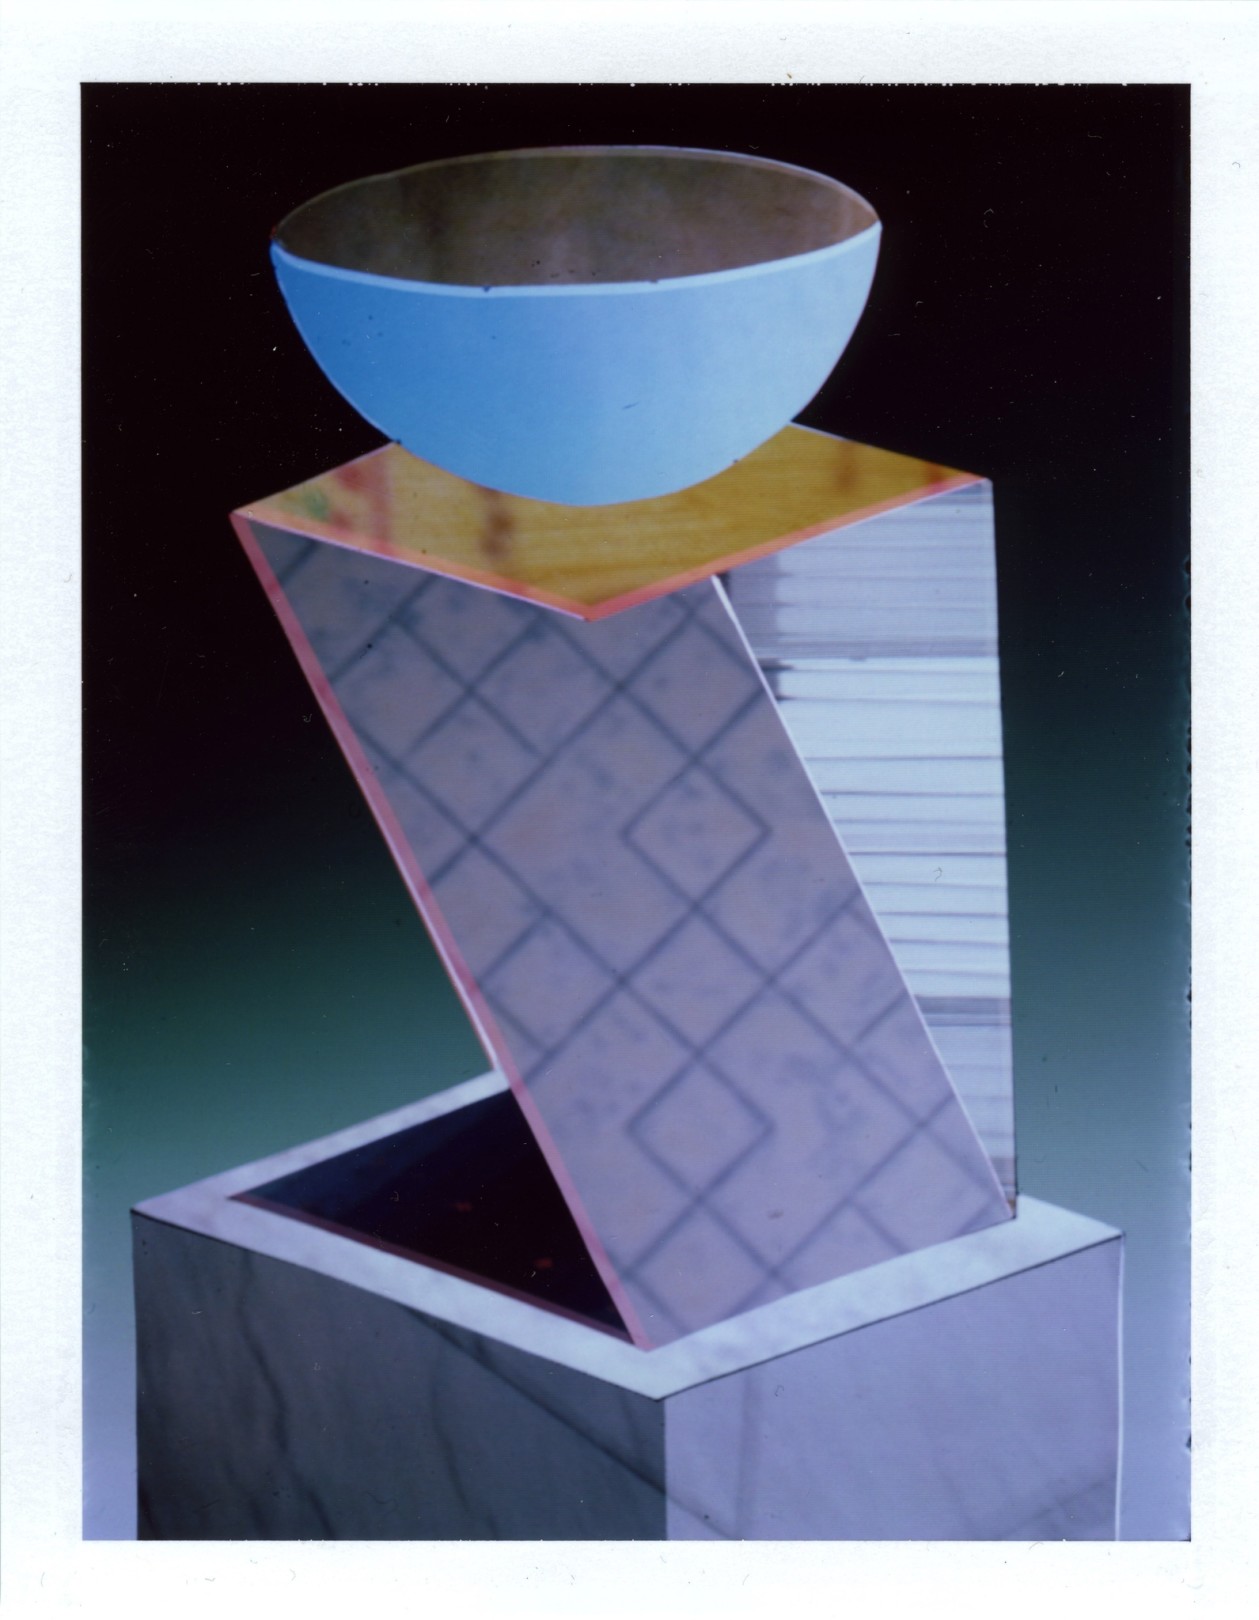 Corey Escoto, It's a Sculpture #2 (Basket, Bol, Cuenco, Conn Smythe), 2014